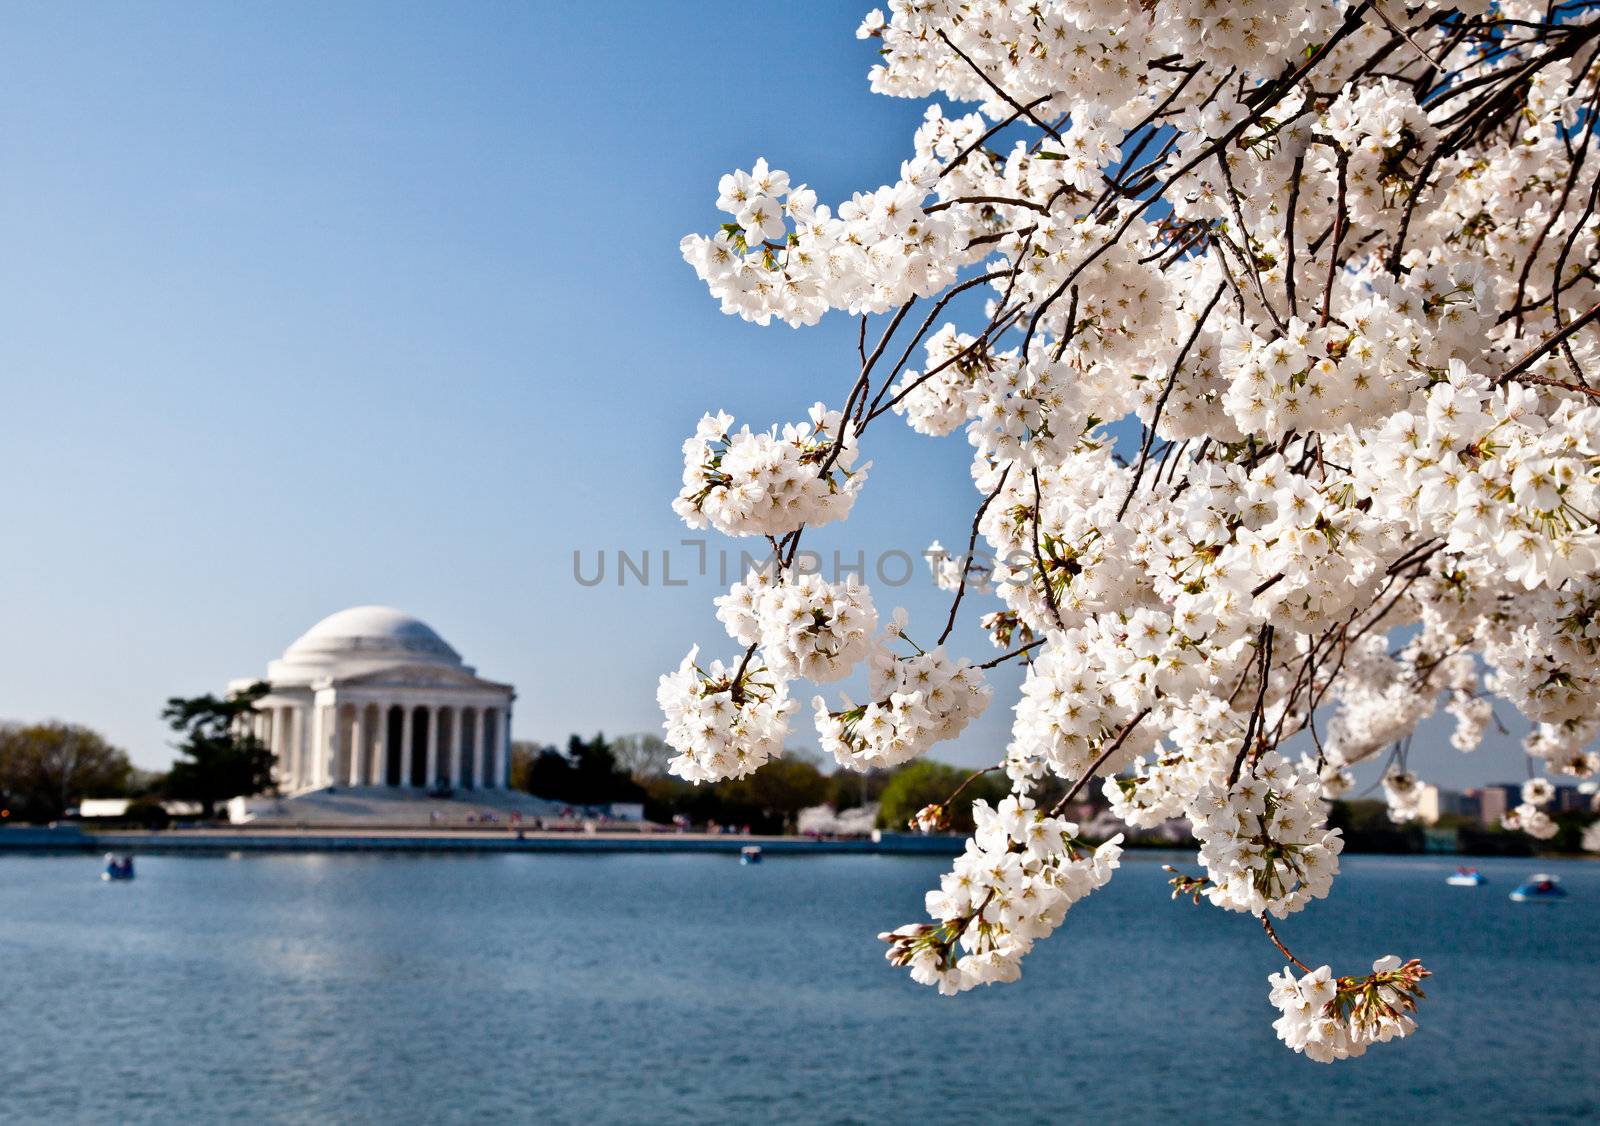 Washington DC Jefferson Memorial with Cherry Blossoms by DashaRosato